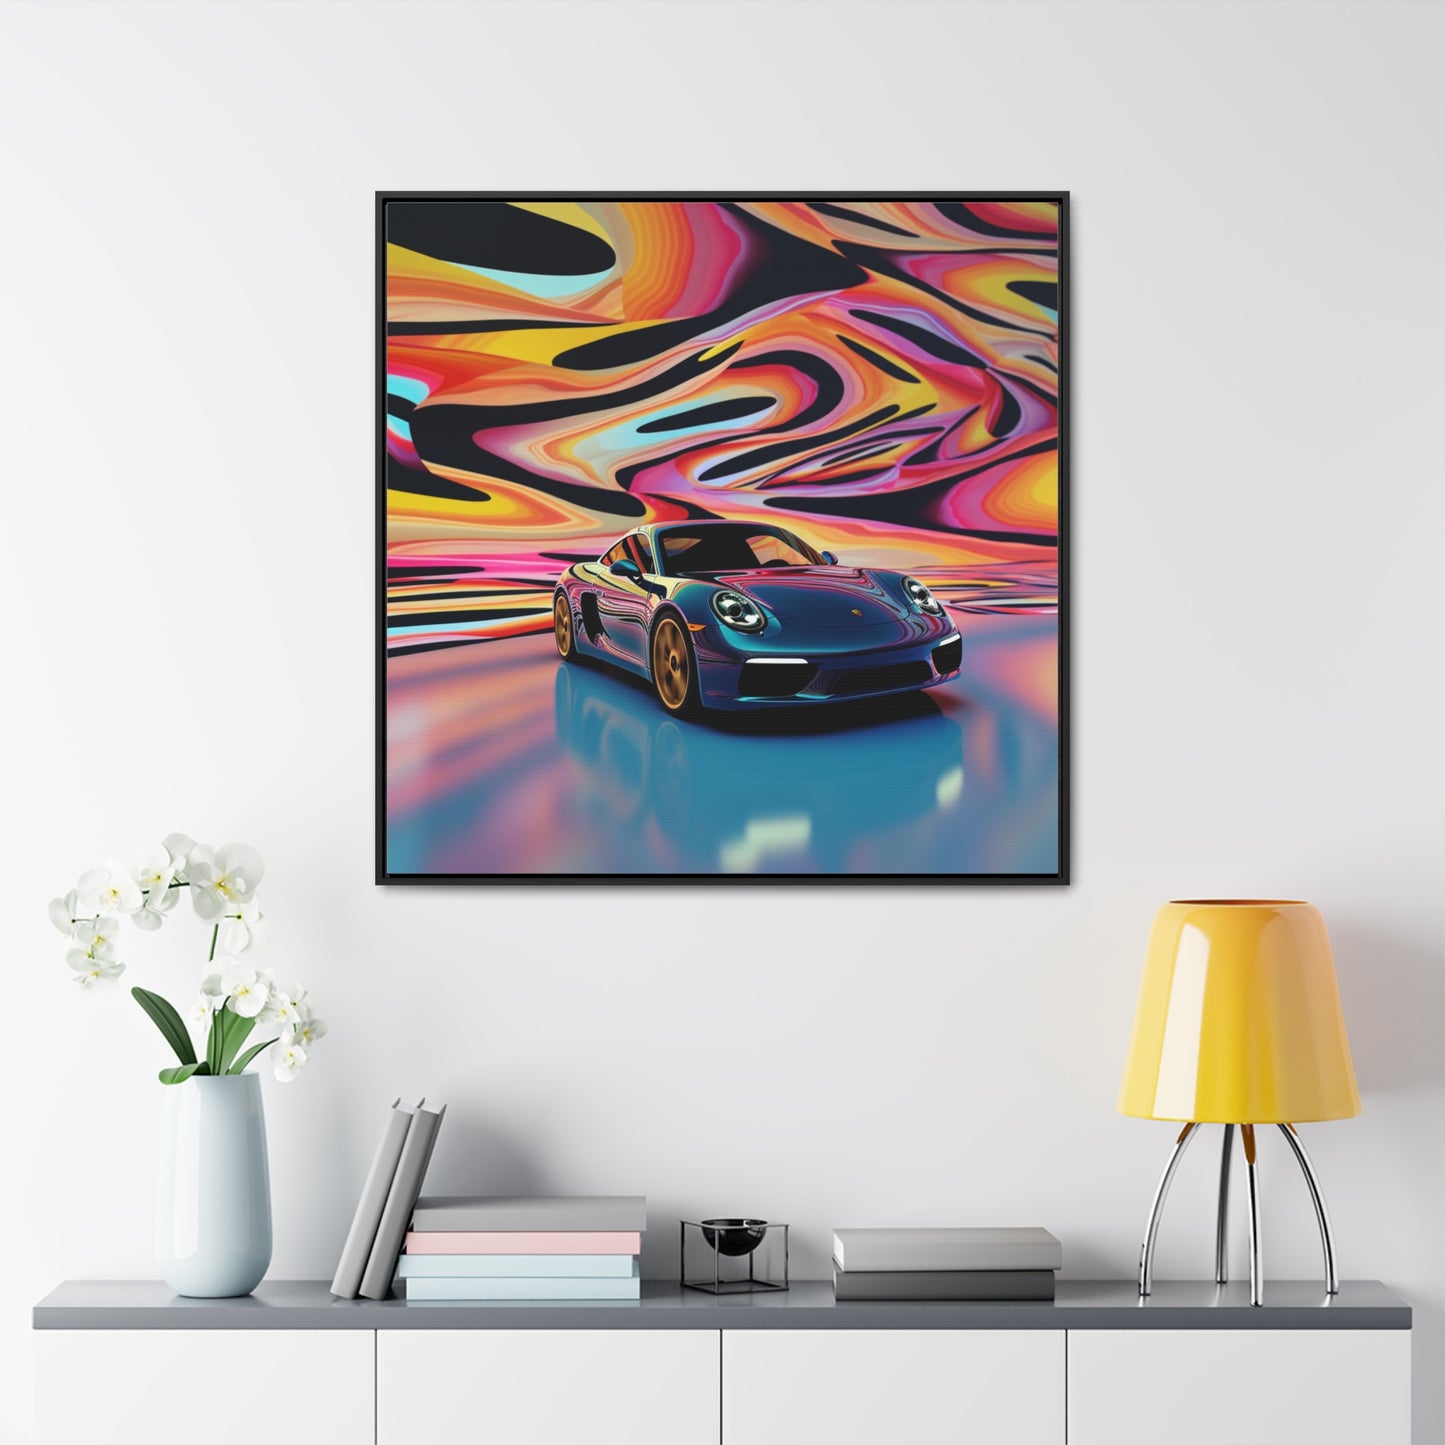 Gallery Canvas Wraps, Square Frame Porsche Water Fusion 2